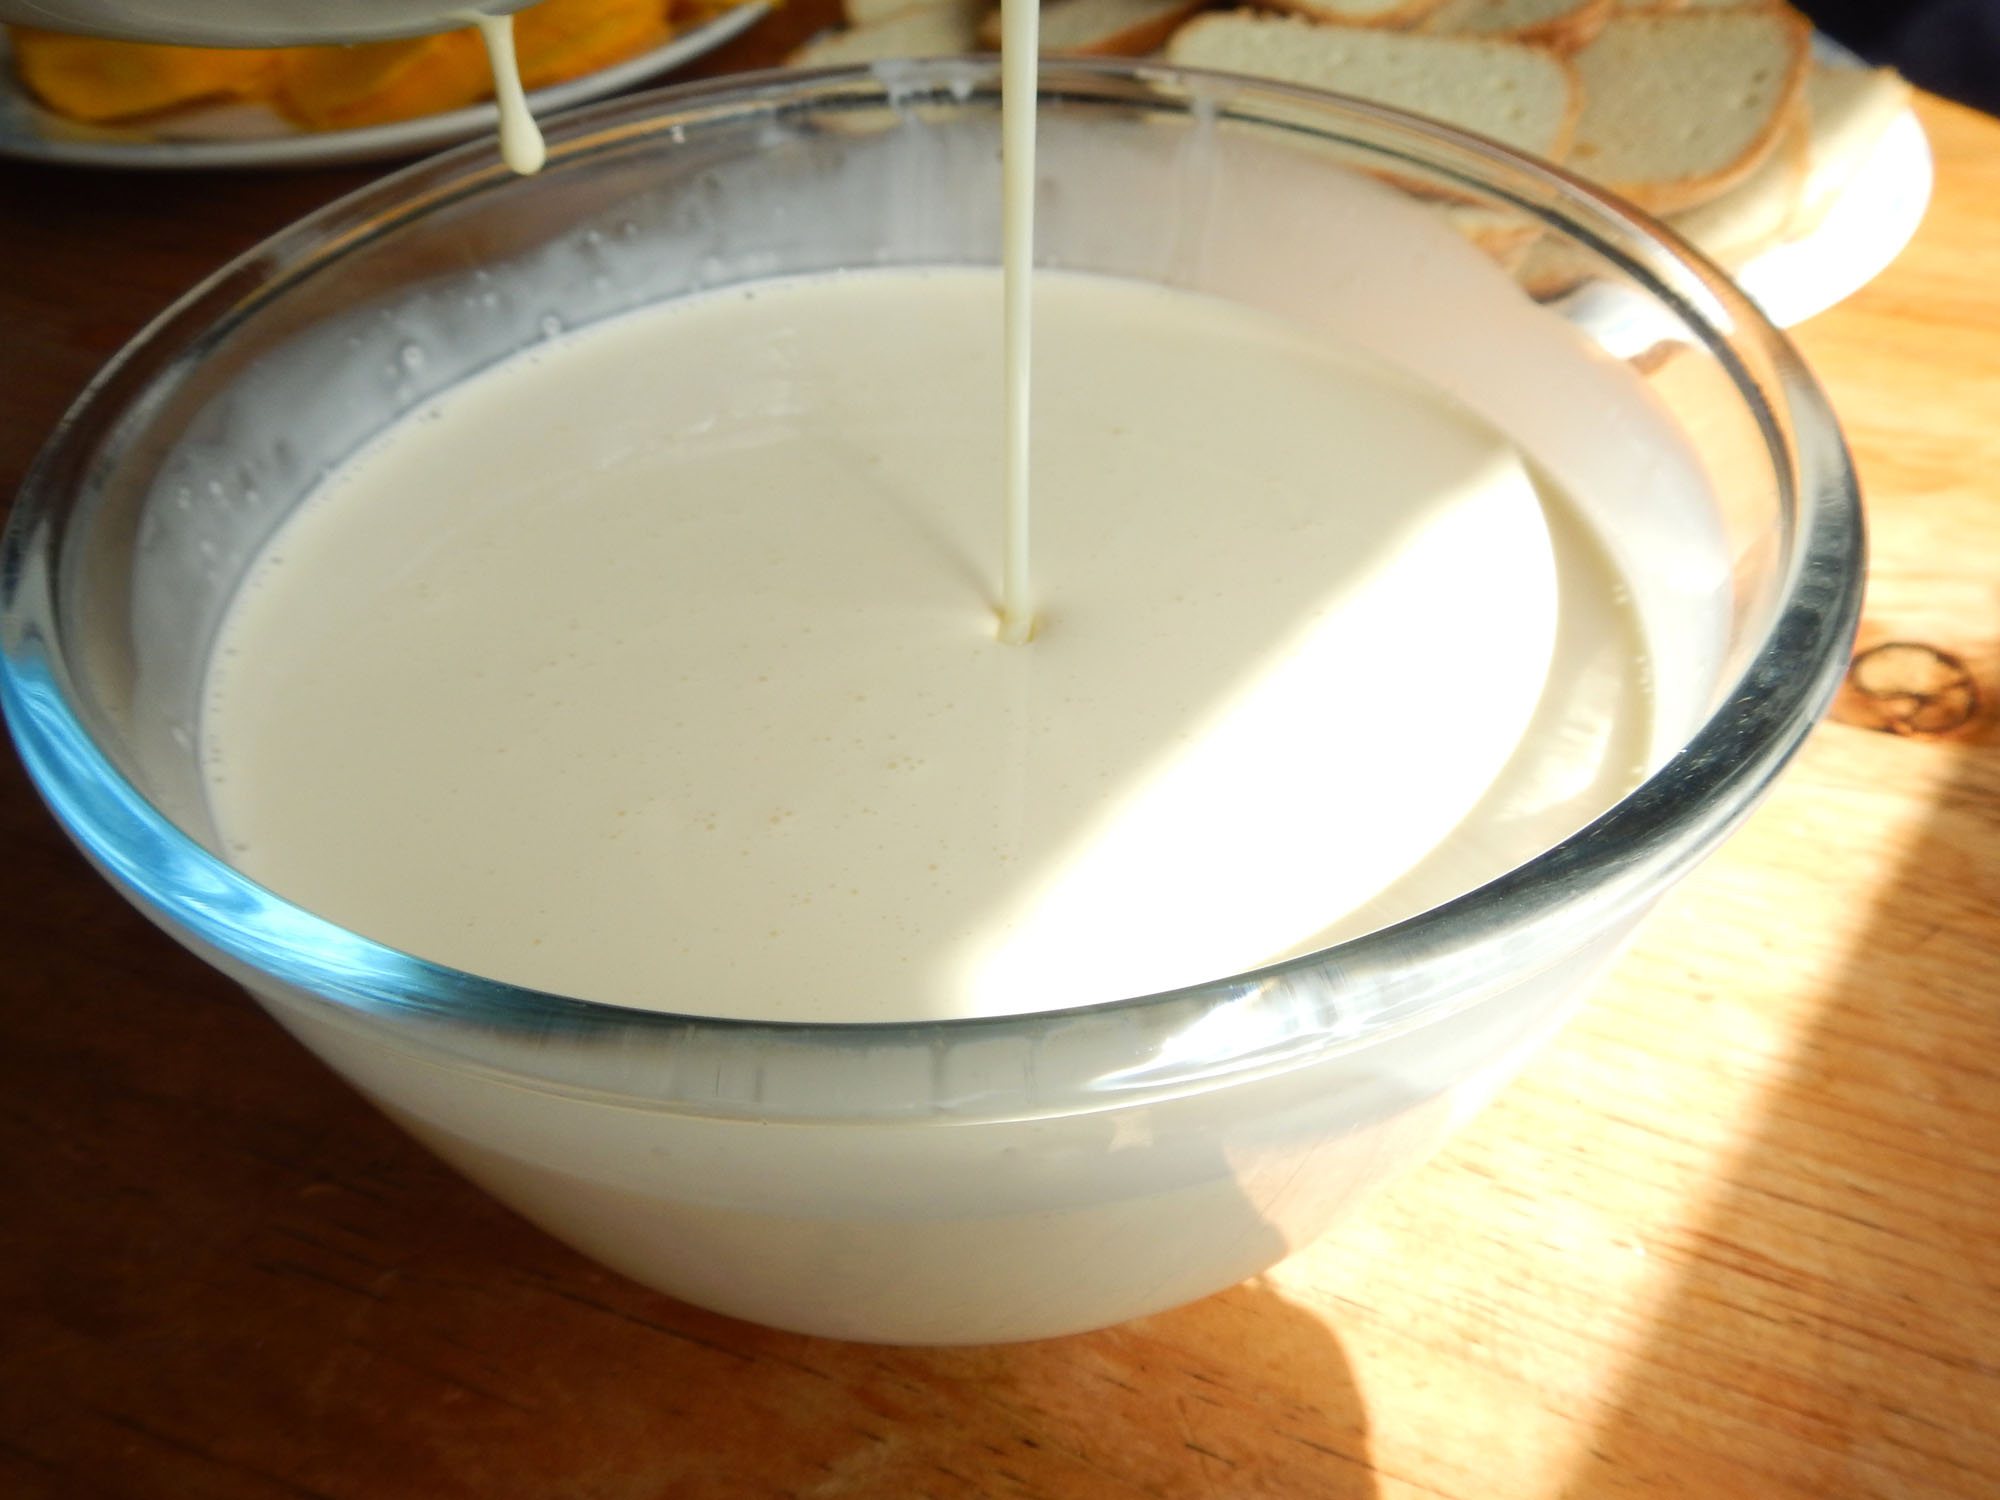 Mixed double cream and light condensed milk